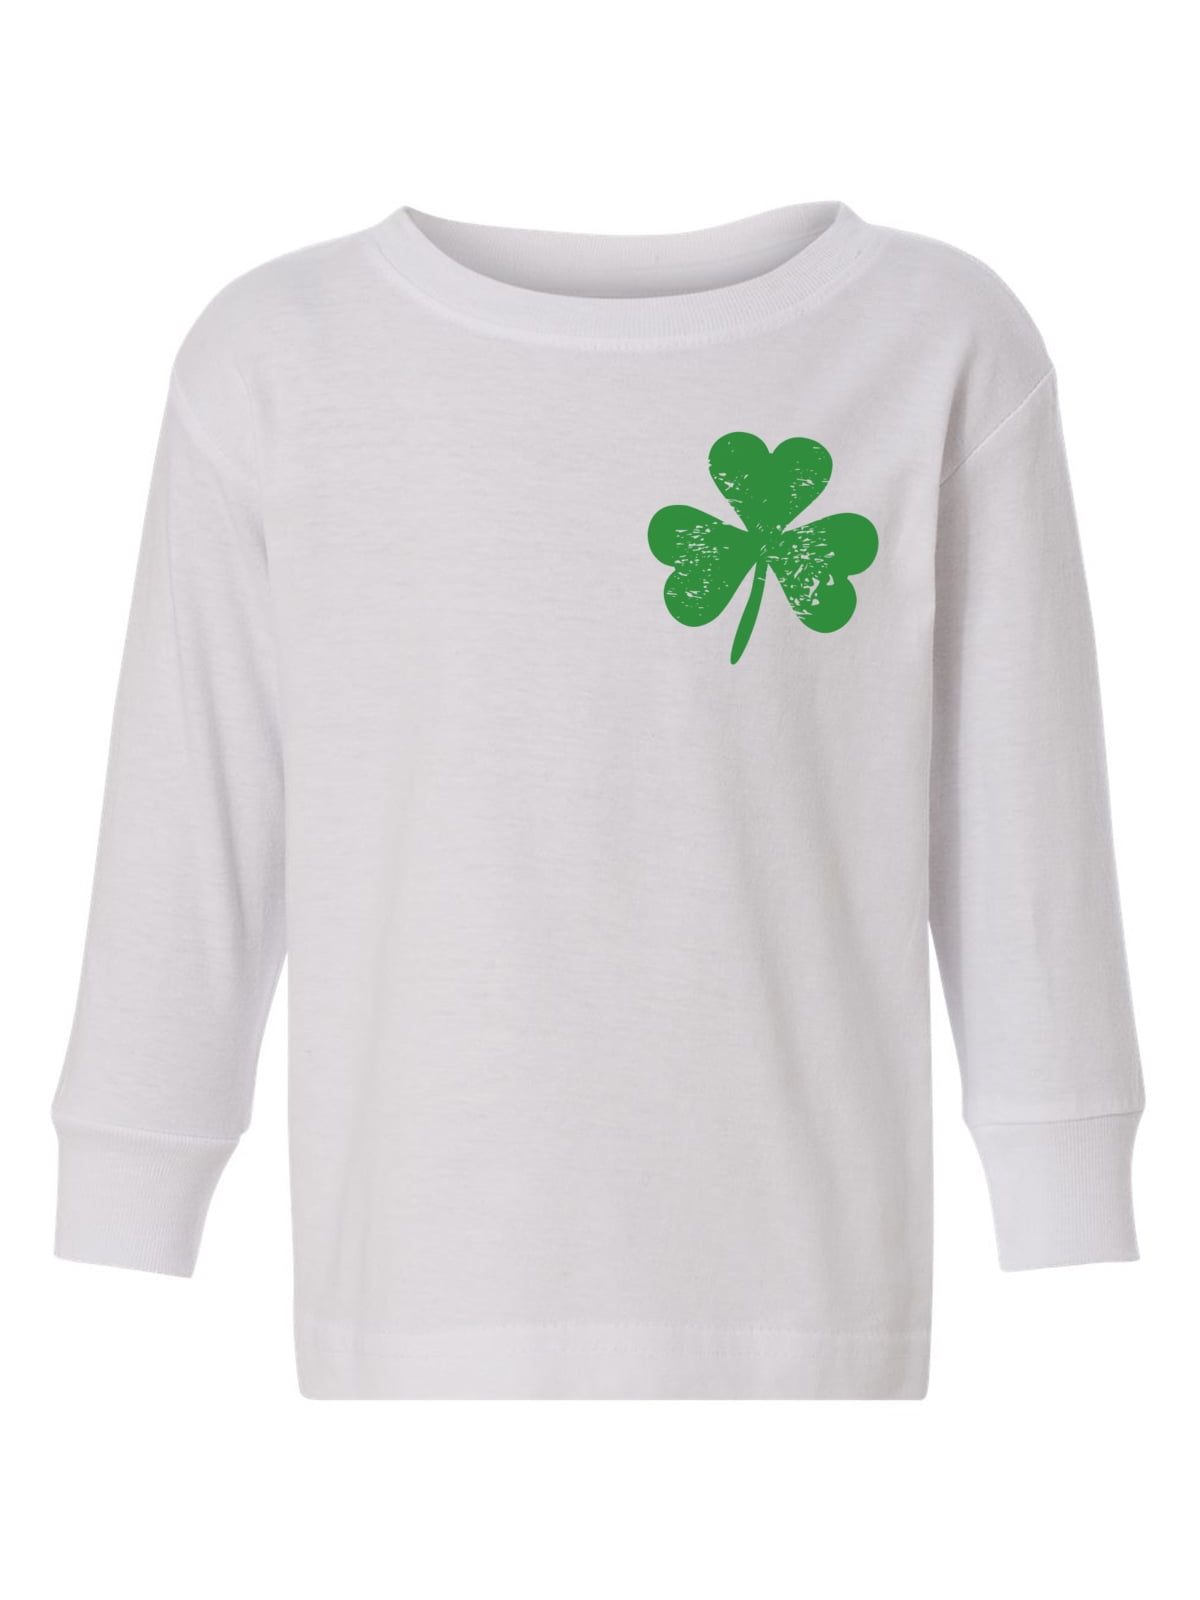 Girls Custom Shamrock Unicorn T Shirt Personalised St Patricks Day Cute Gifts